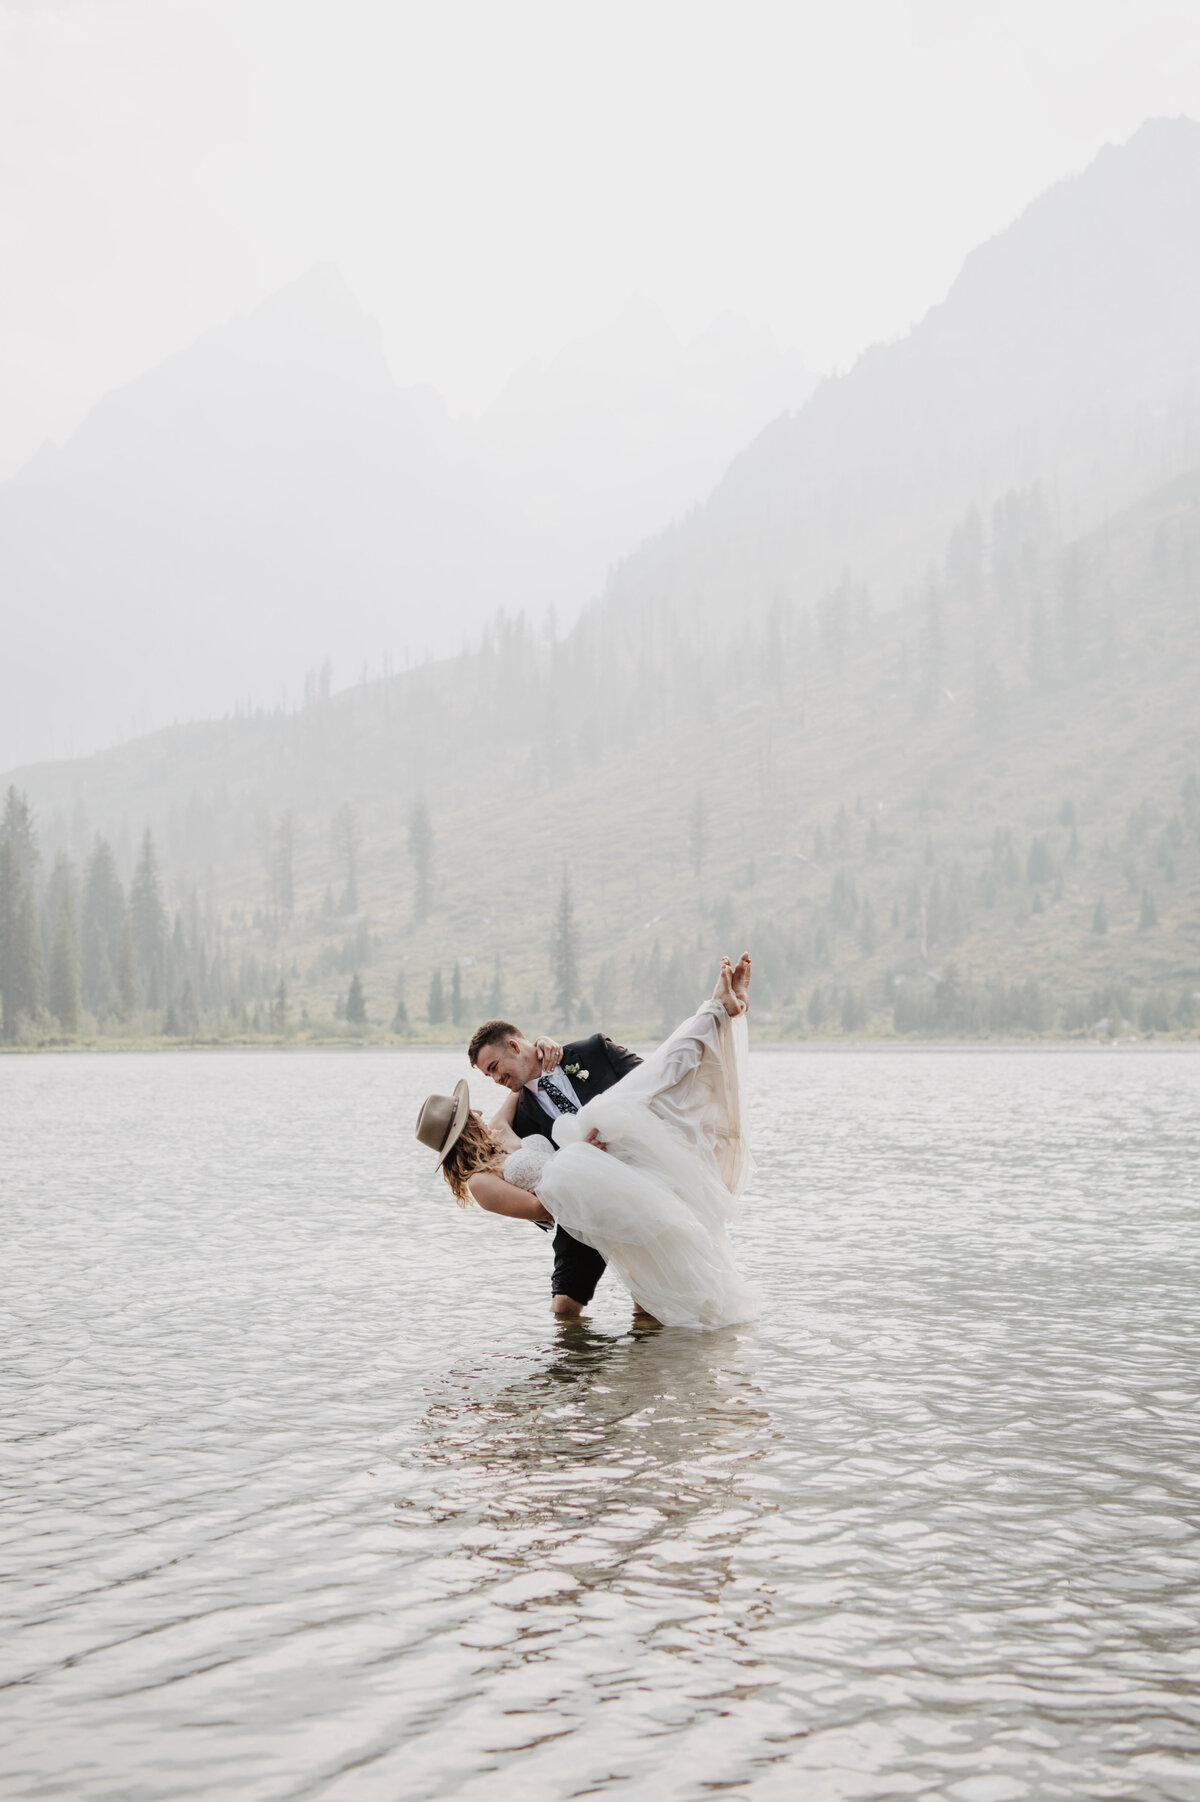 Jackson Hole Photographers capture couple portraits in water